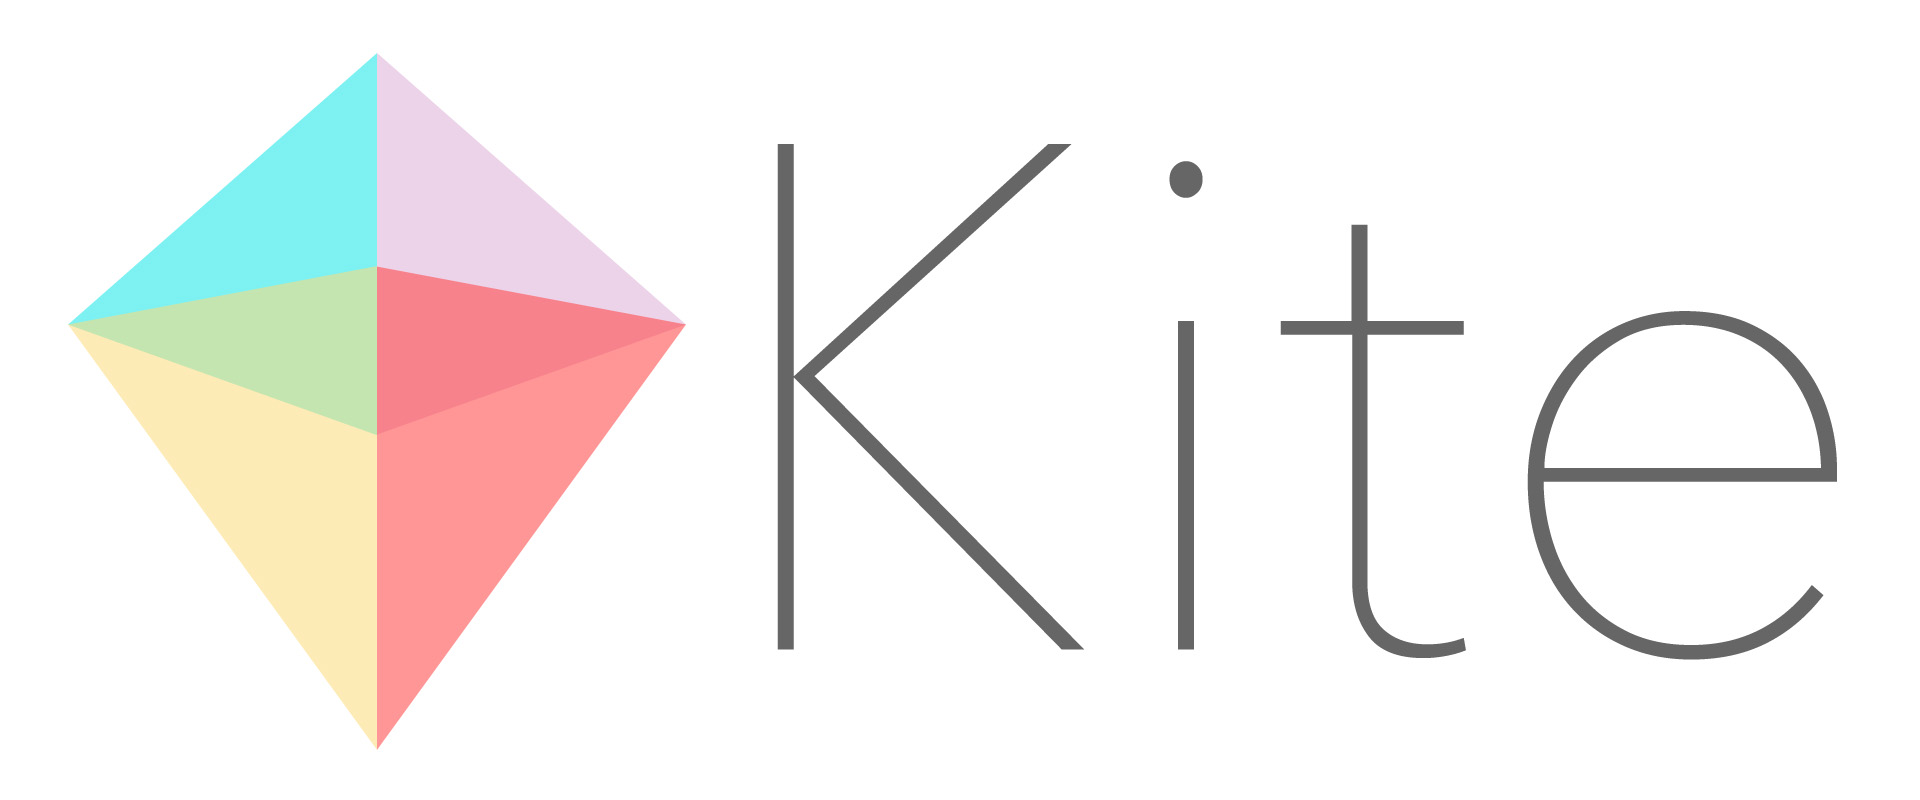 Url w. 4. Kite Ventures. Kite logo. Воздушный змей логотип. Kite Ventures logo.